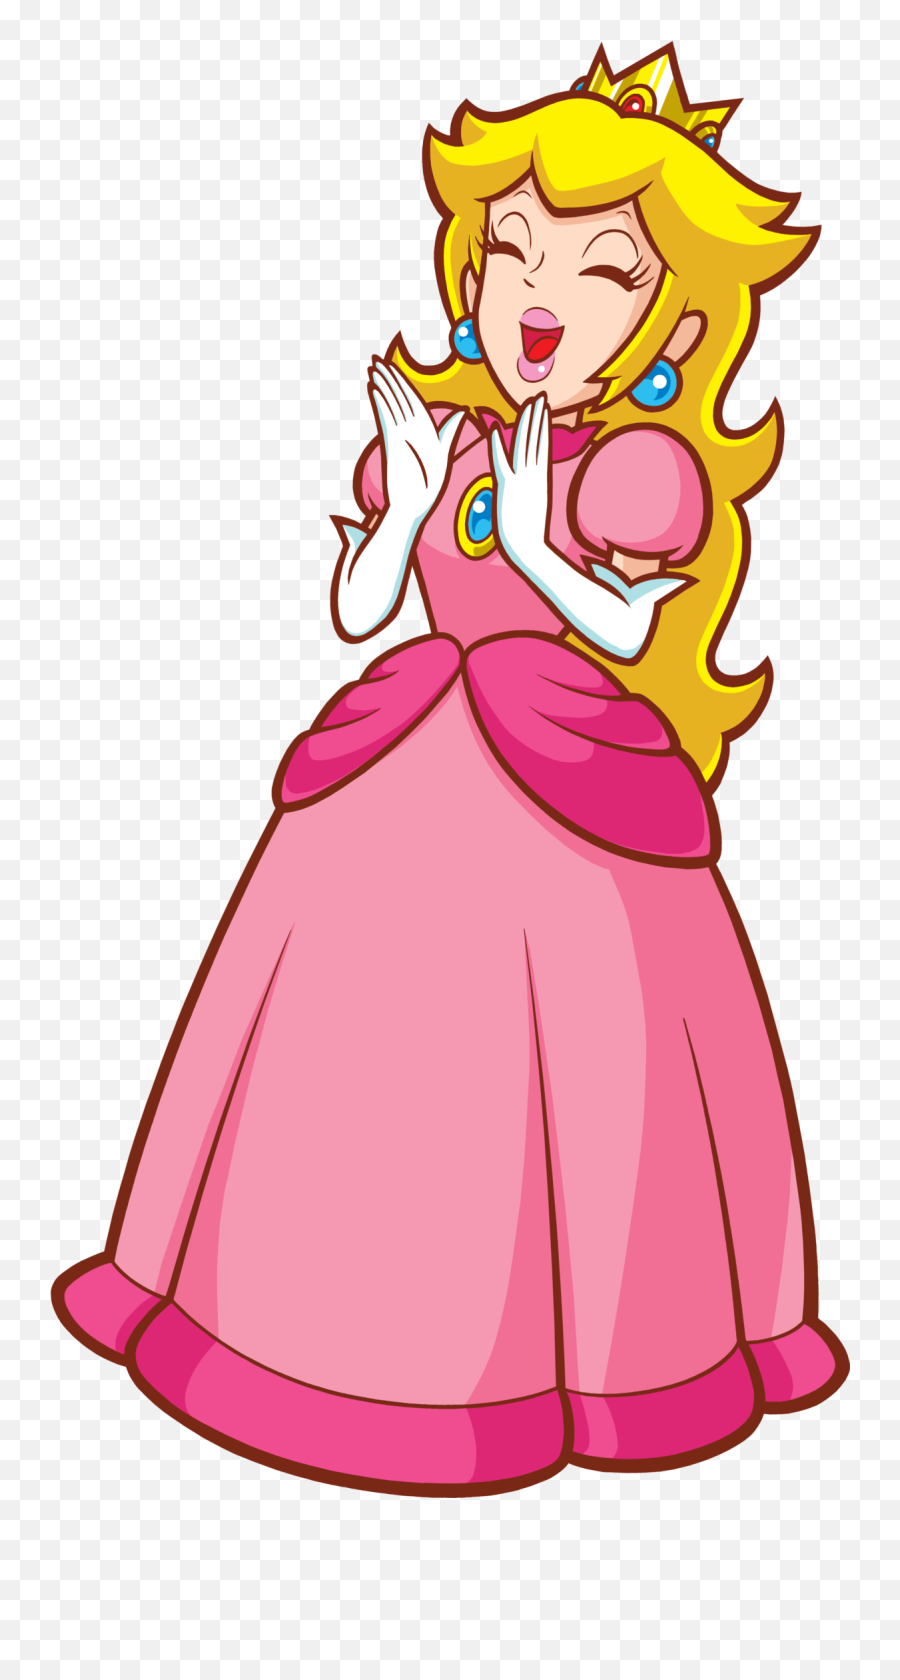 Princess Peach Png - Super Princess Peach,Princess Peach Transparent